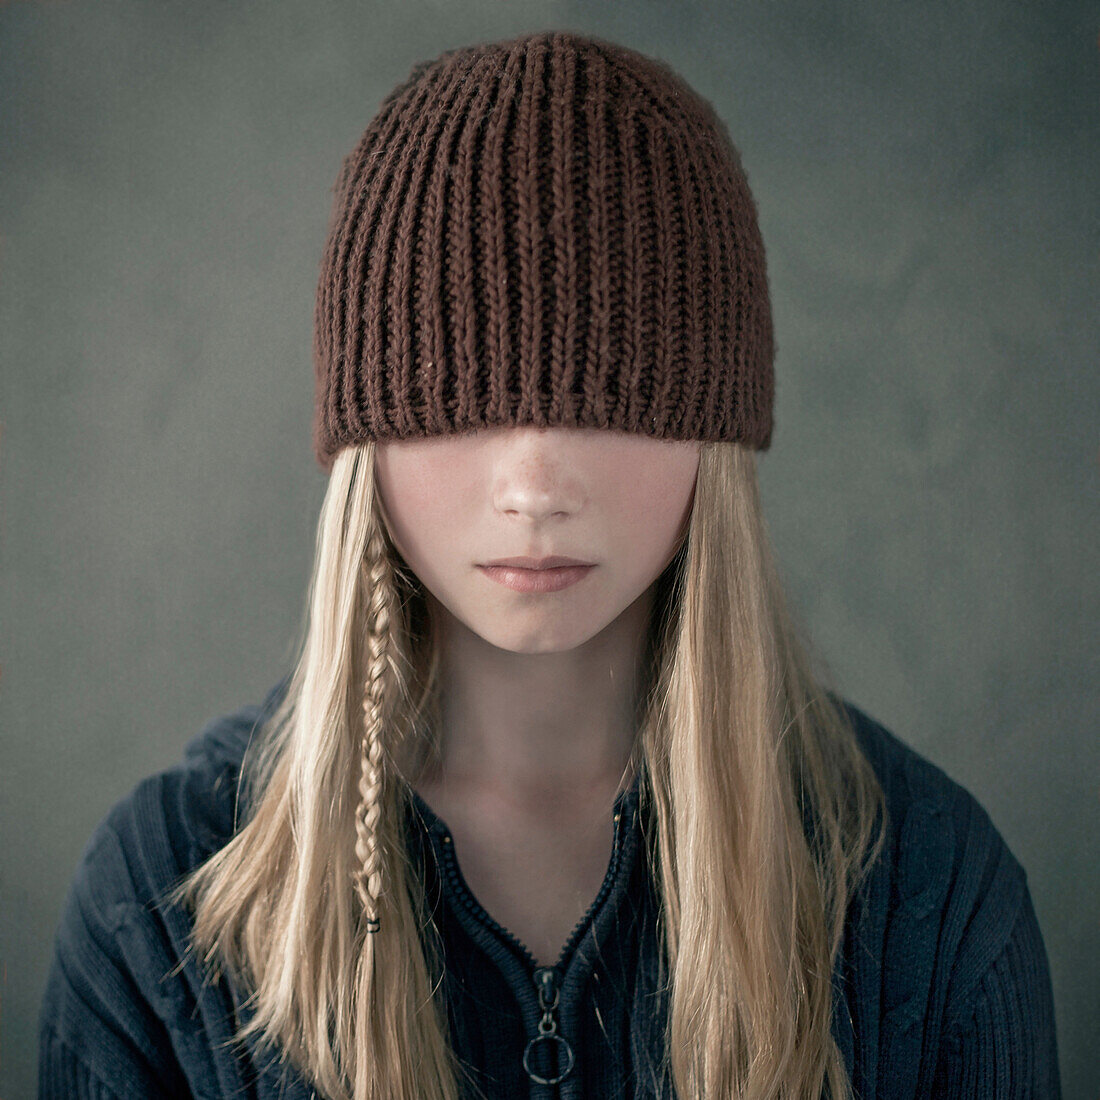 Teenage girl wearing knitted cap over eyes, Nizniy Tagil, Sverdlovsk, Russia